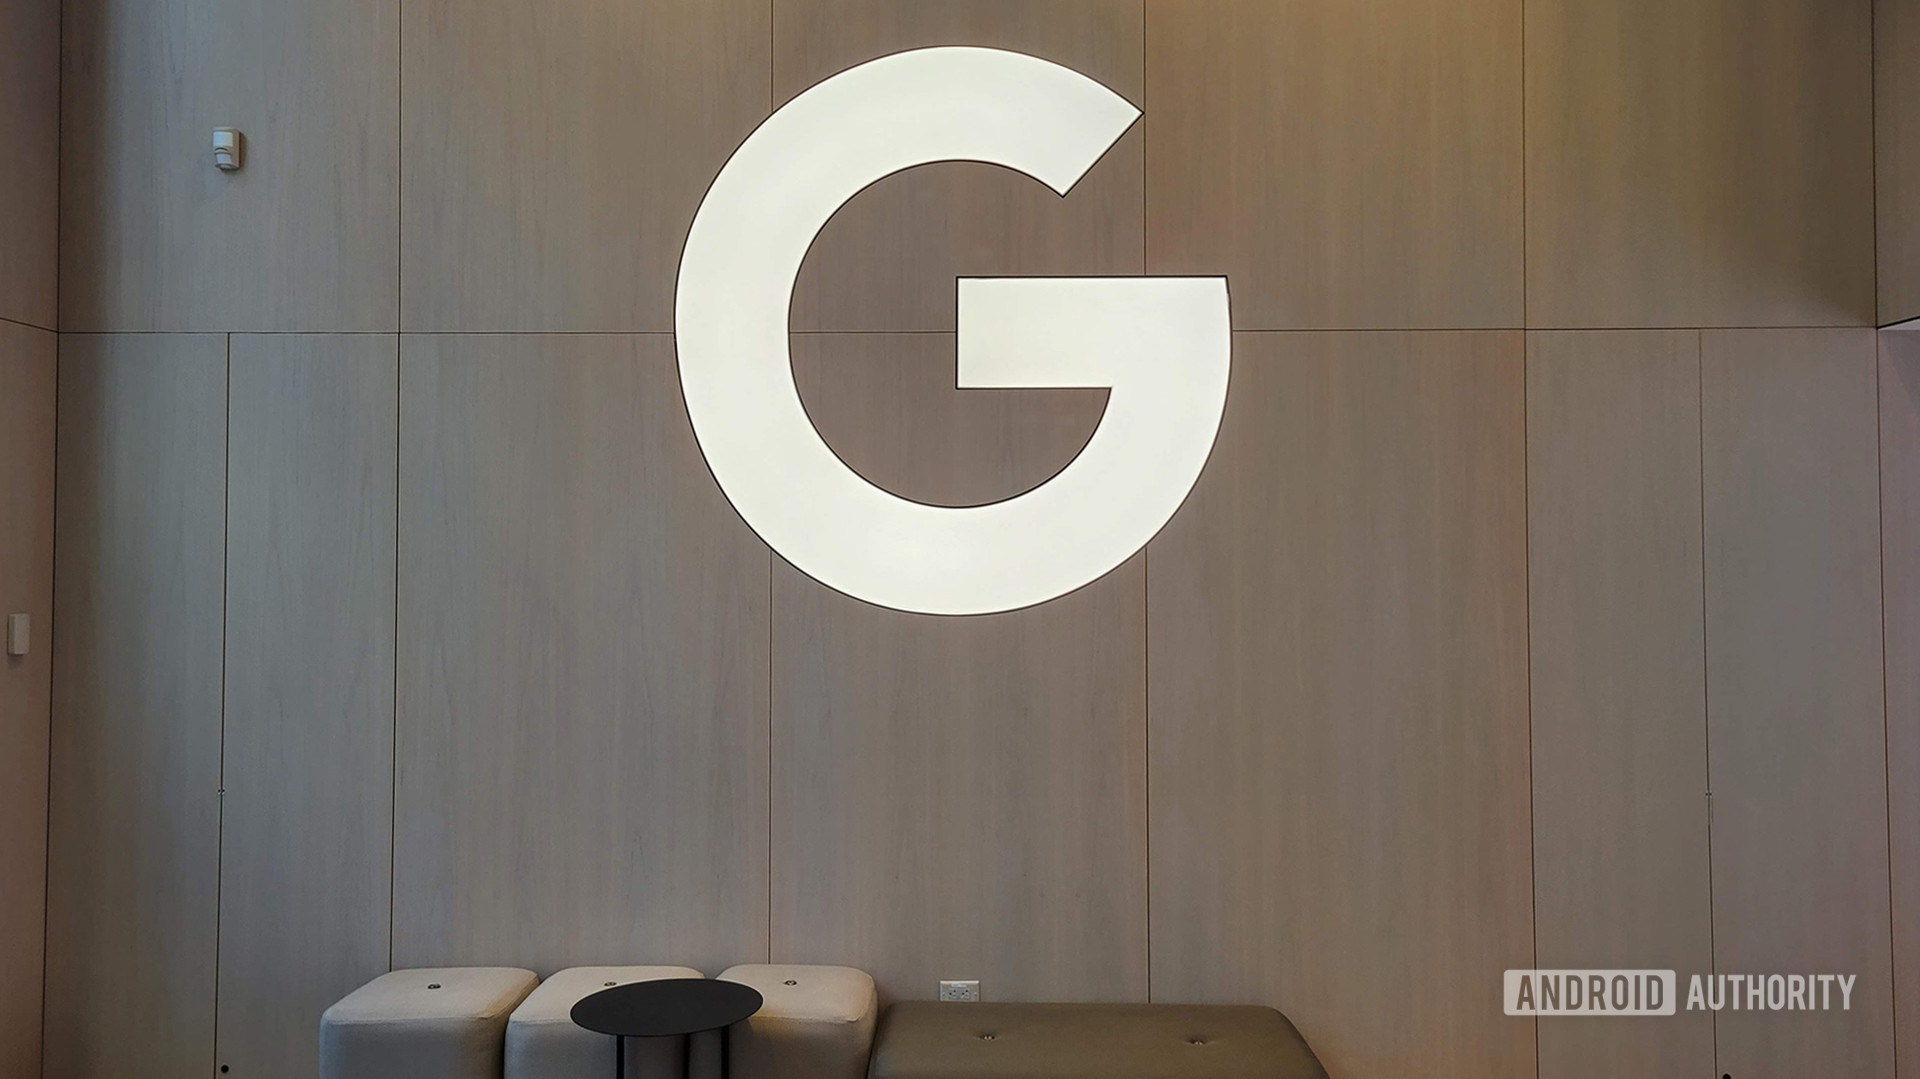 Google Store NYC Opening Tour showing Google logo.